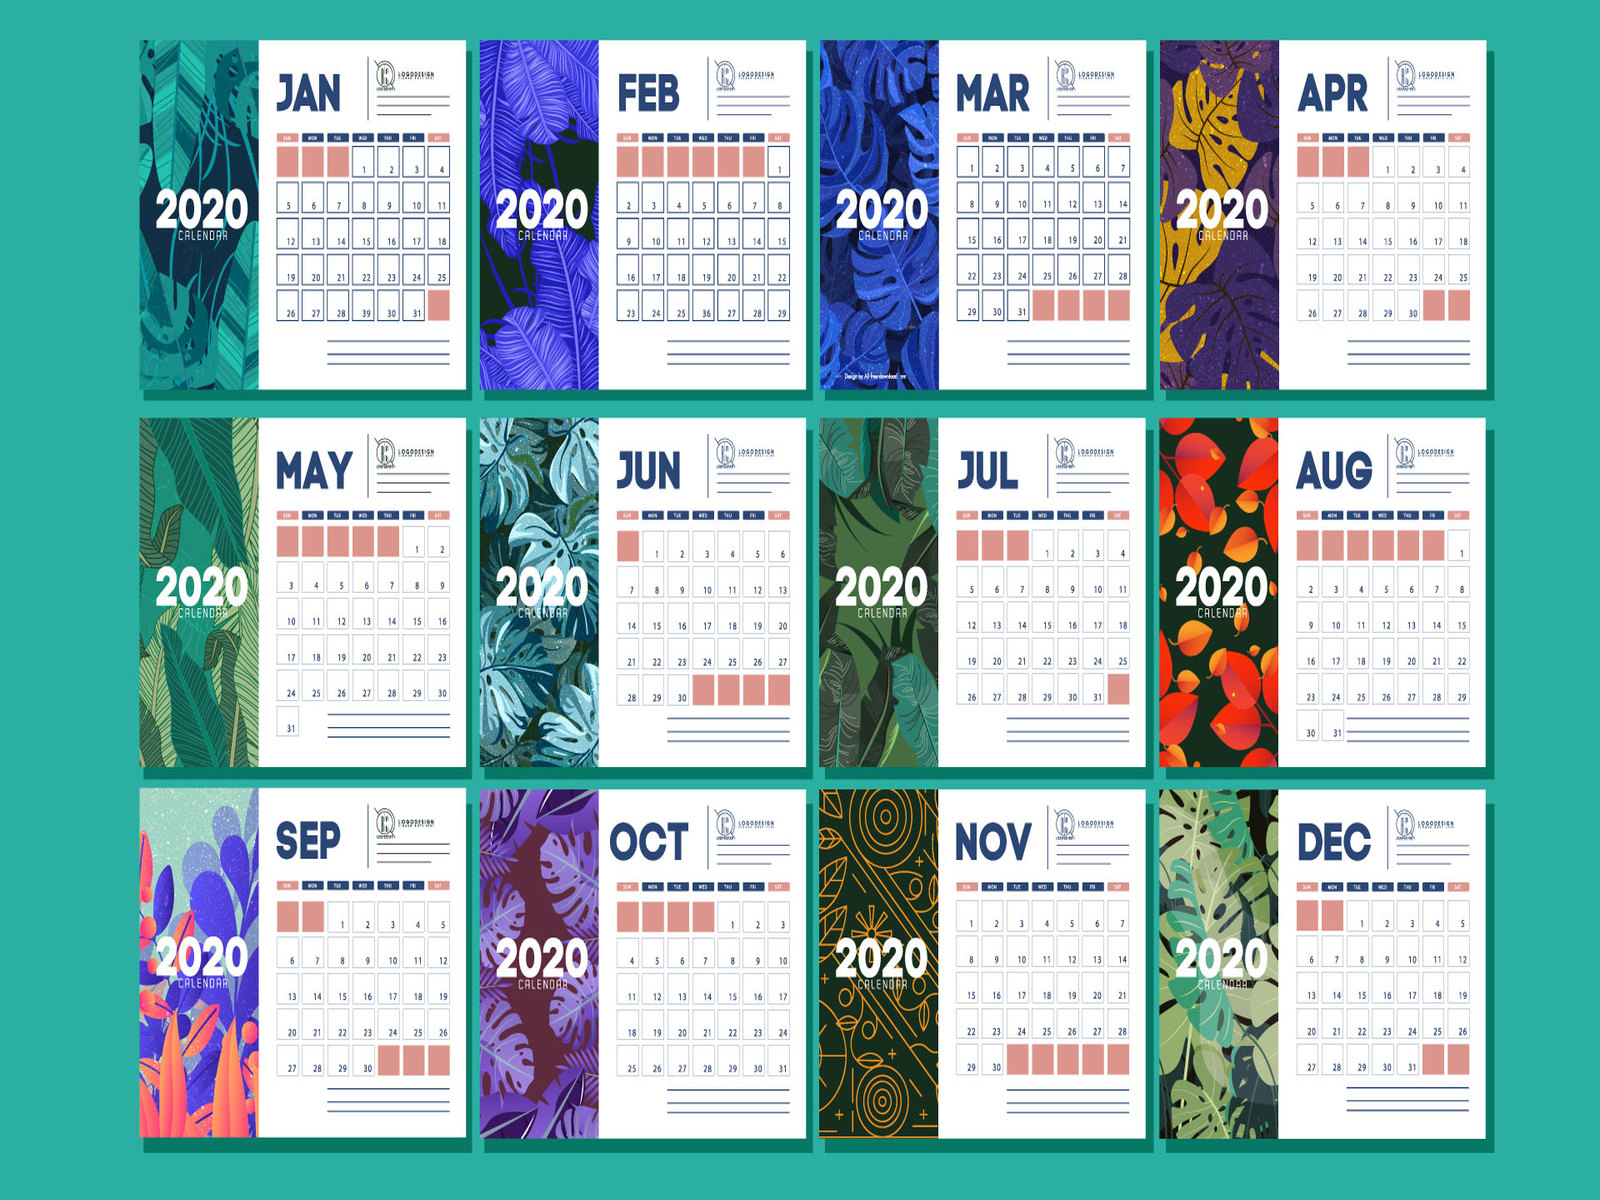 New Year 2020 calendar design by Md Shopon Hossen on Dribbble1600 x 1200